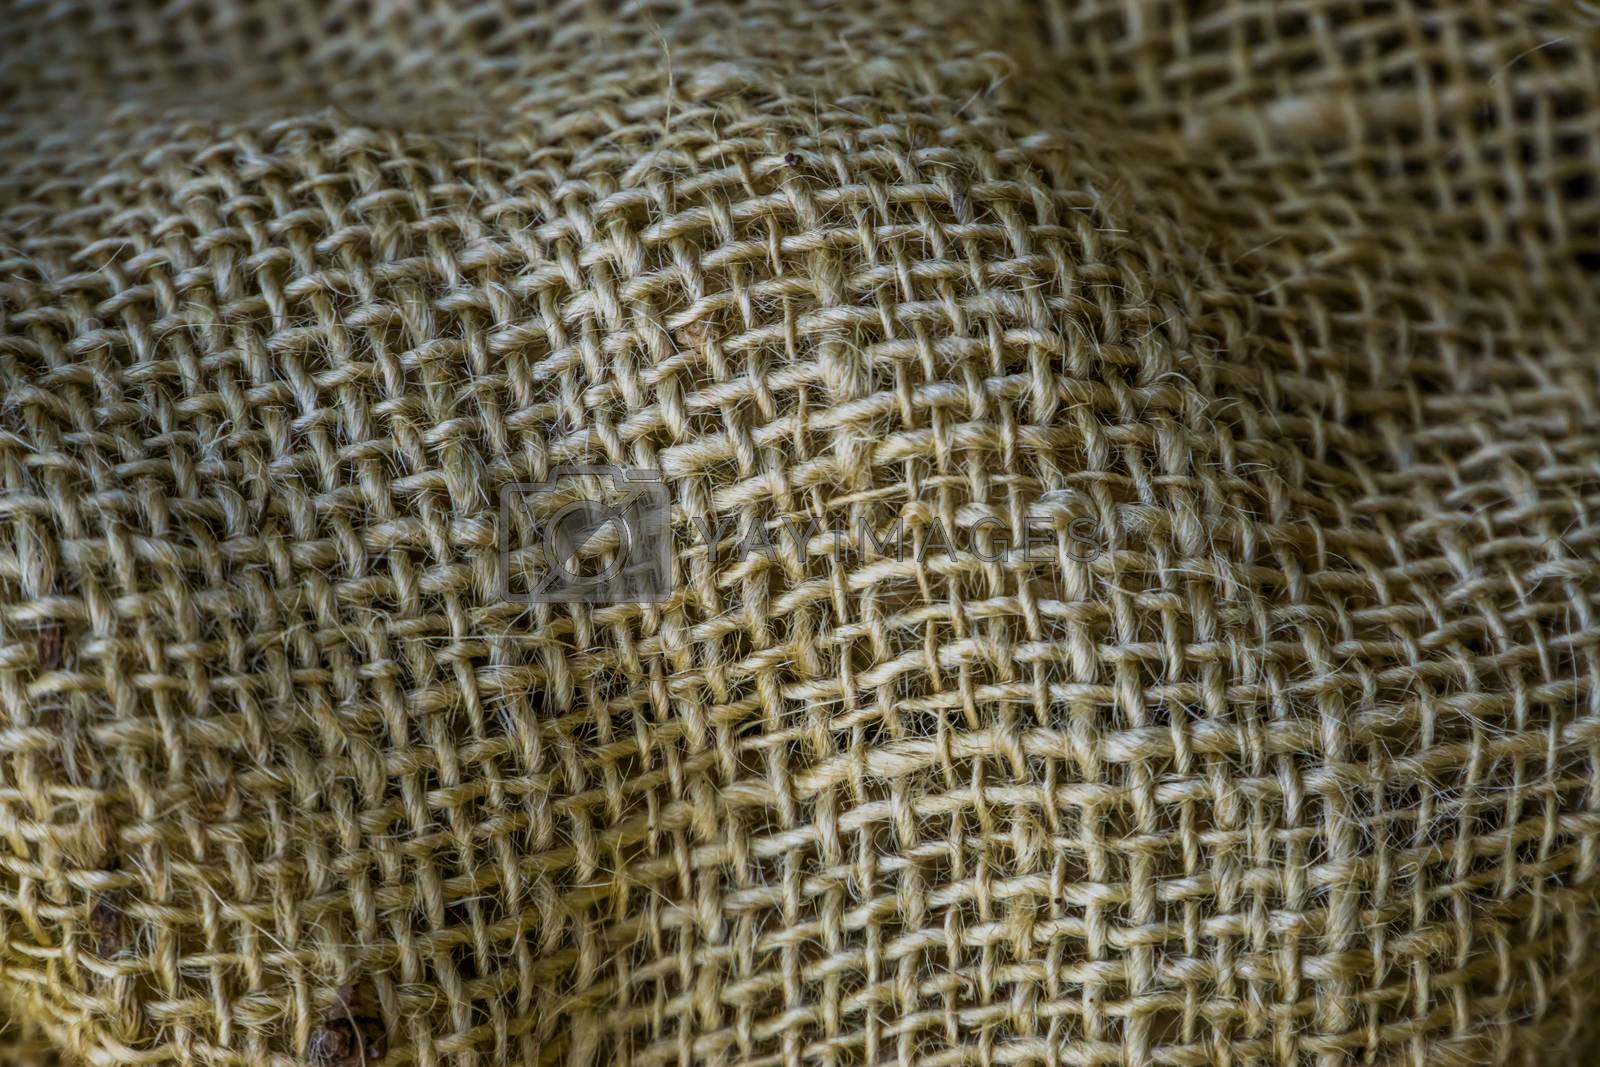 Royalty free image of macro closeup of a jute jute fabric, sackcloth texture, old vintage fabrics, burlap background by charlottebleijenberg